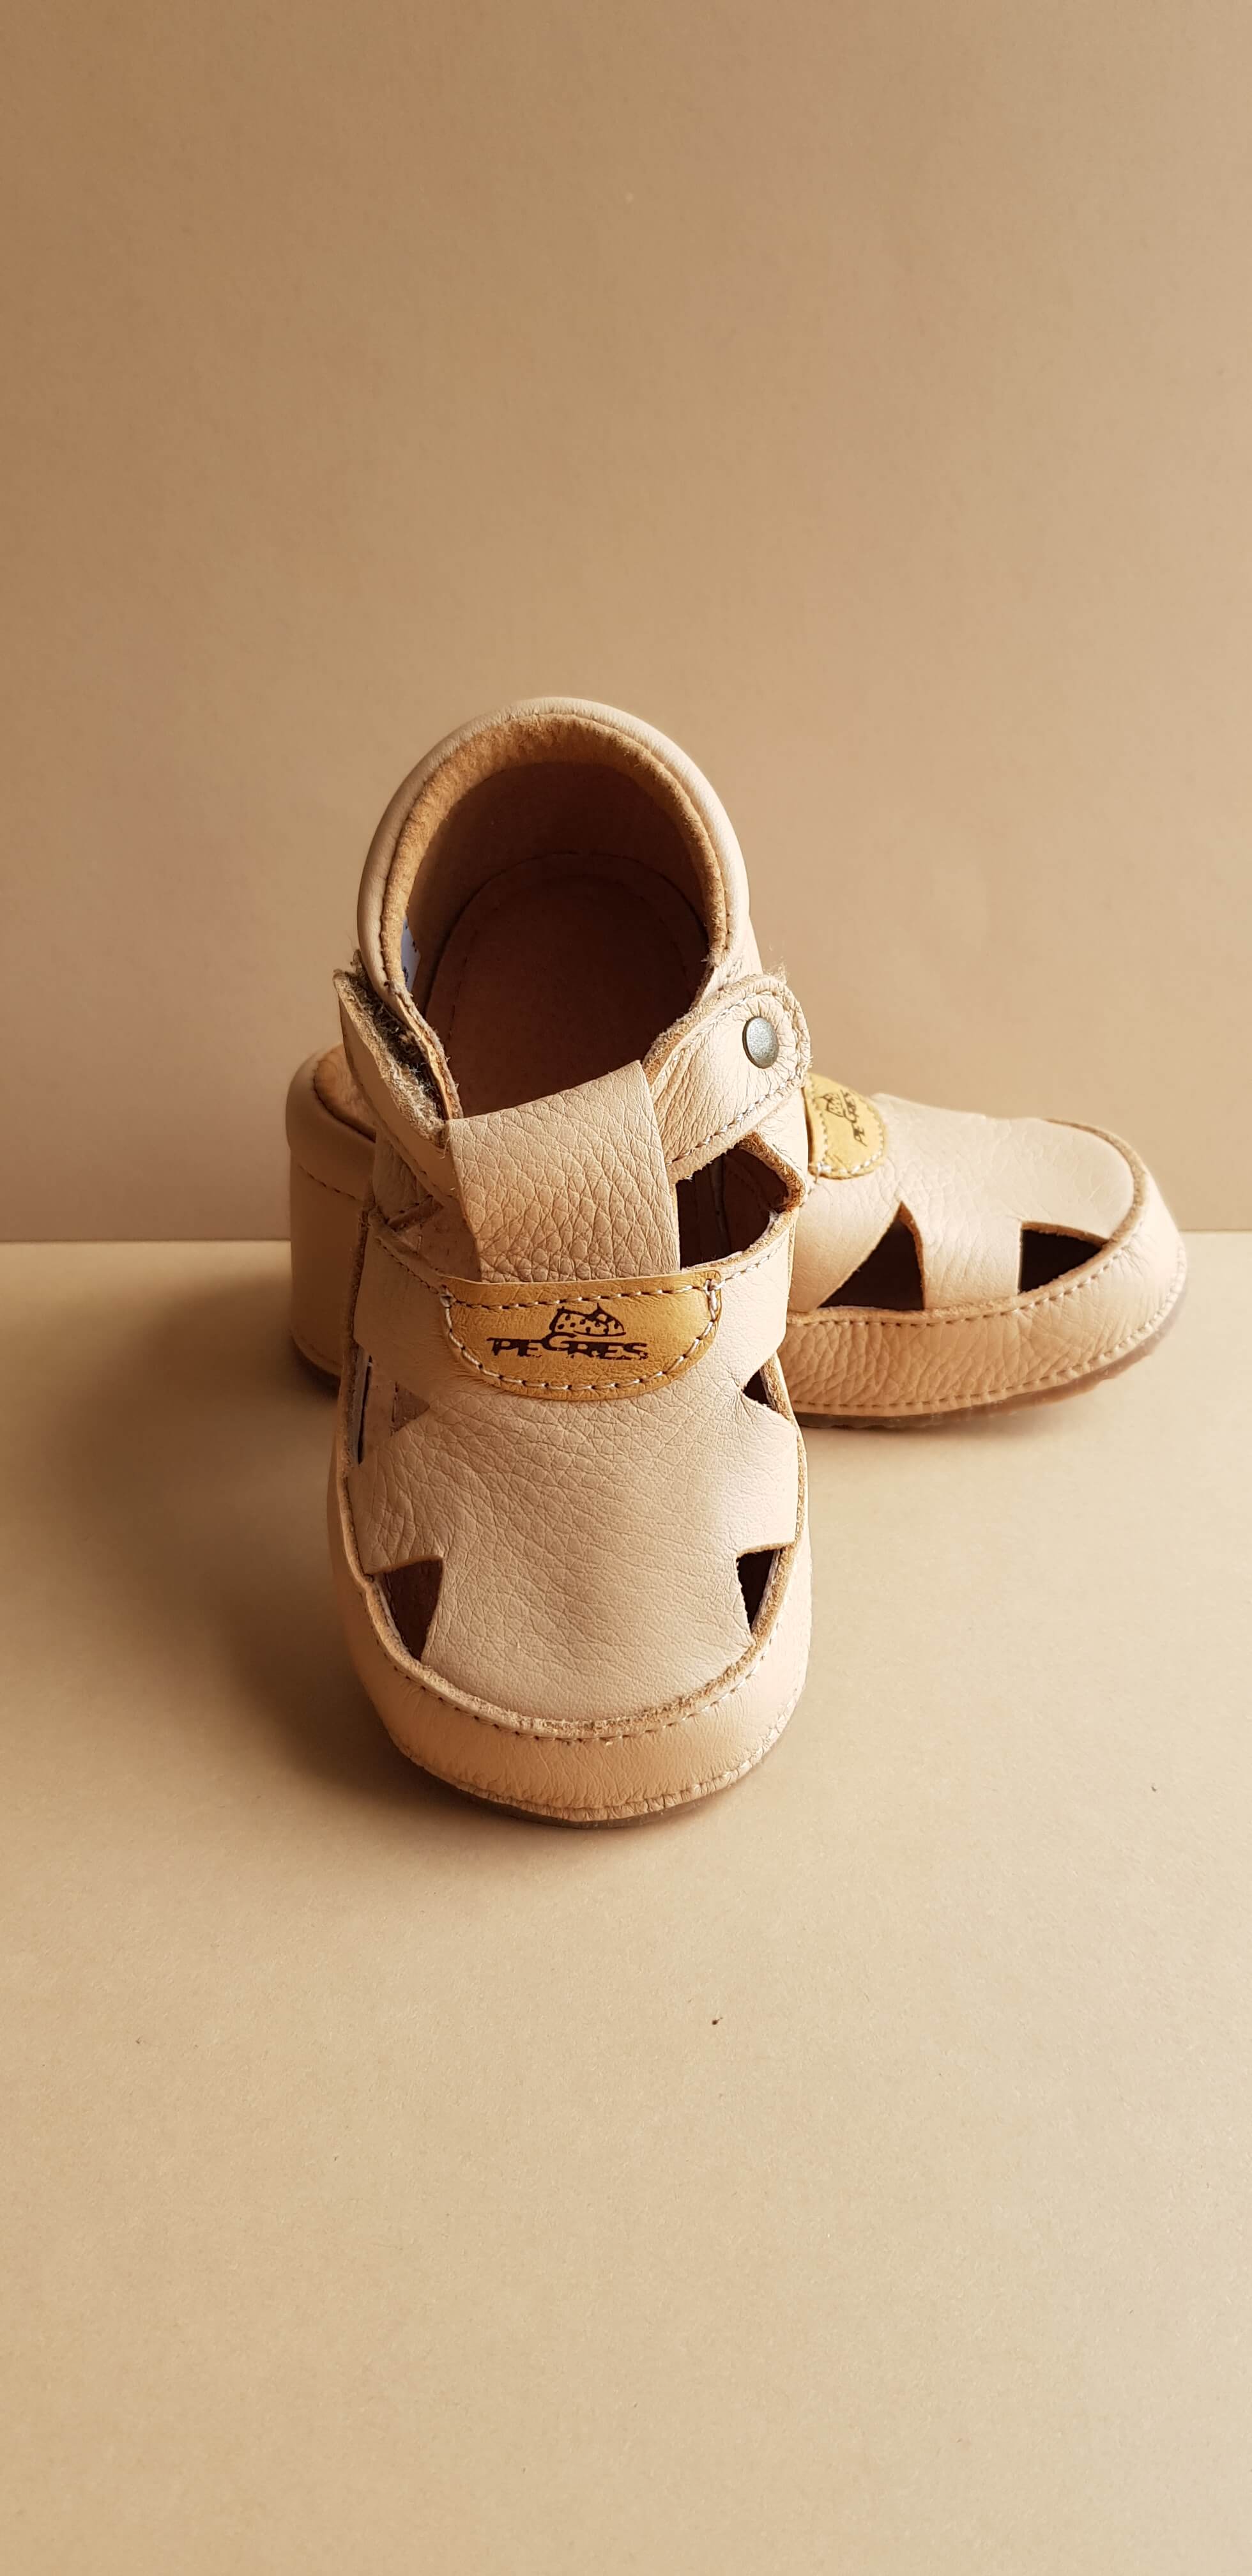 Barefoot Kid's Sandals - Beige